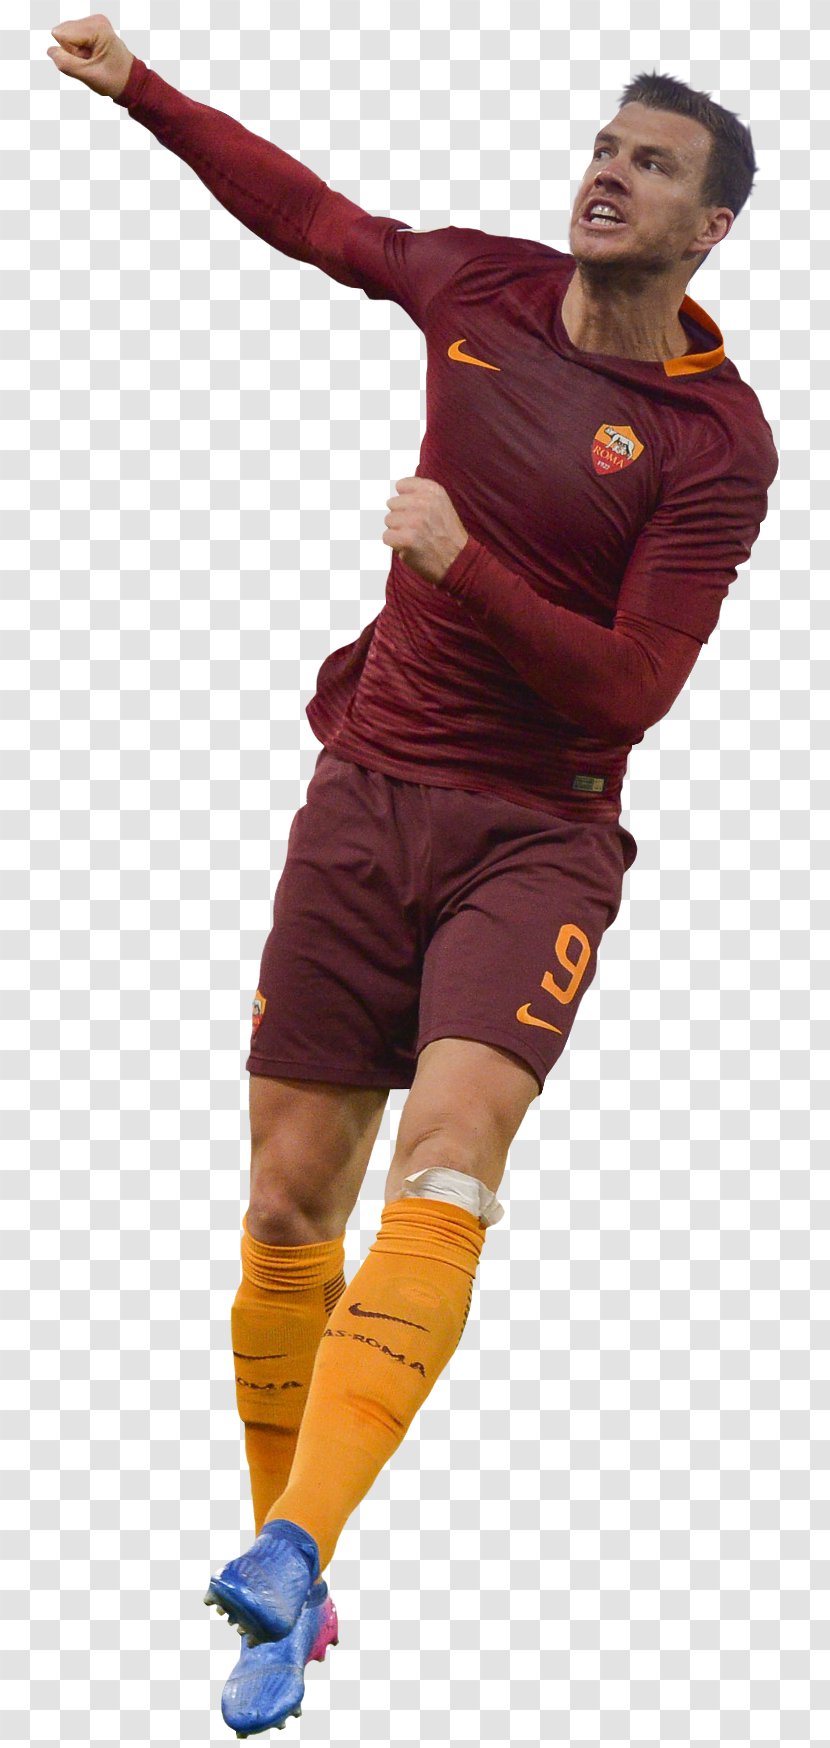 Edin Džeko A.S. Roma Soccer Player Rendering - Shoe - Football Transparent PNG